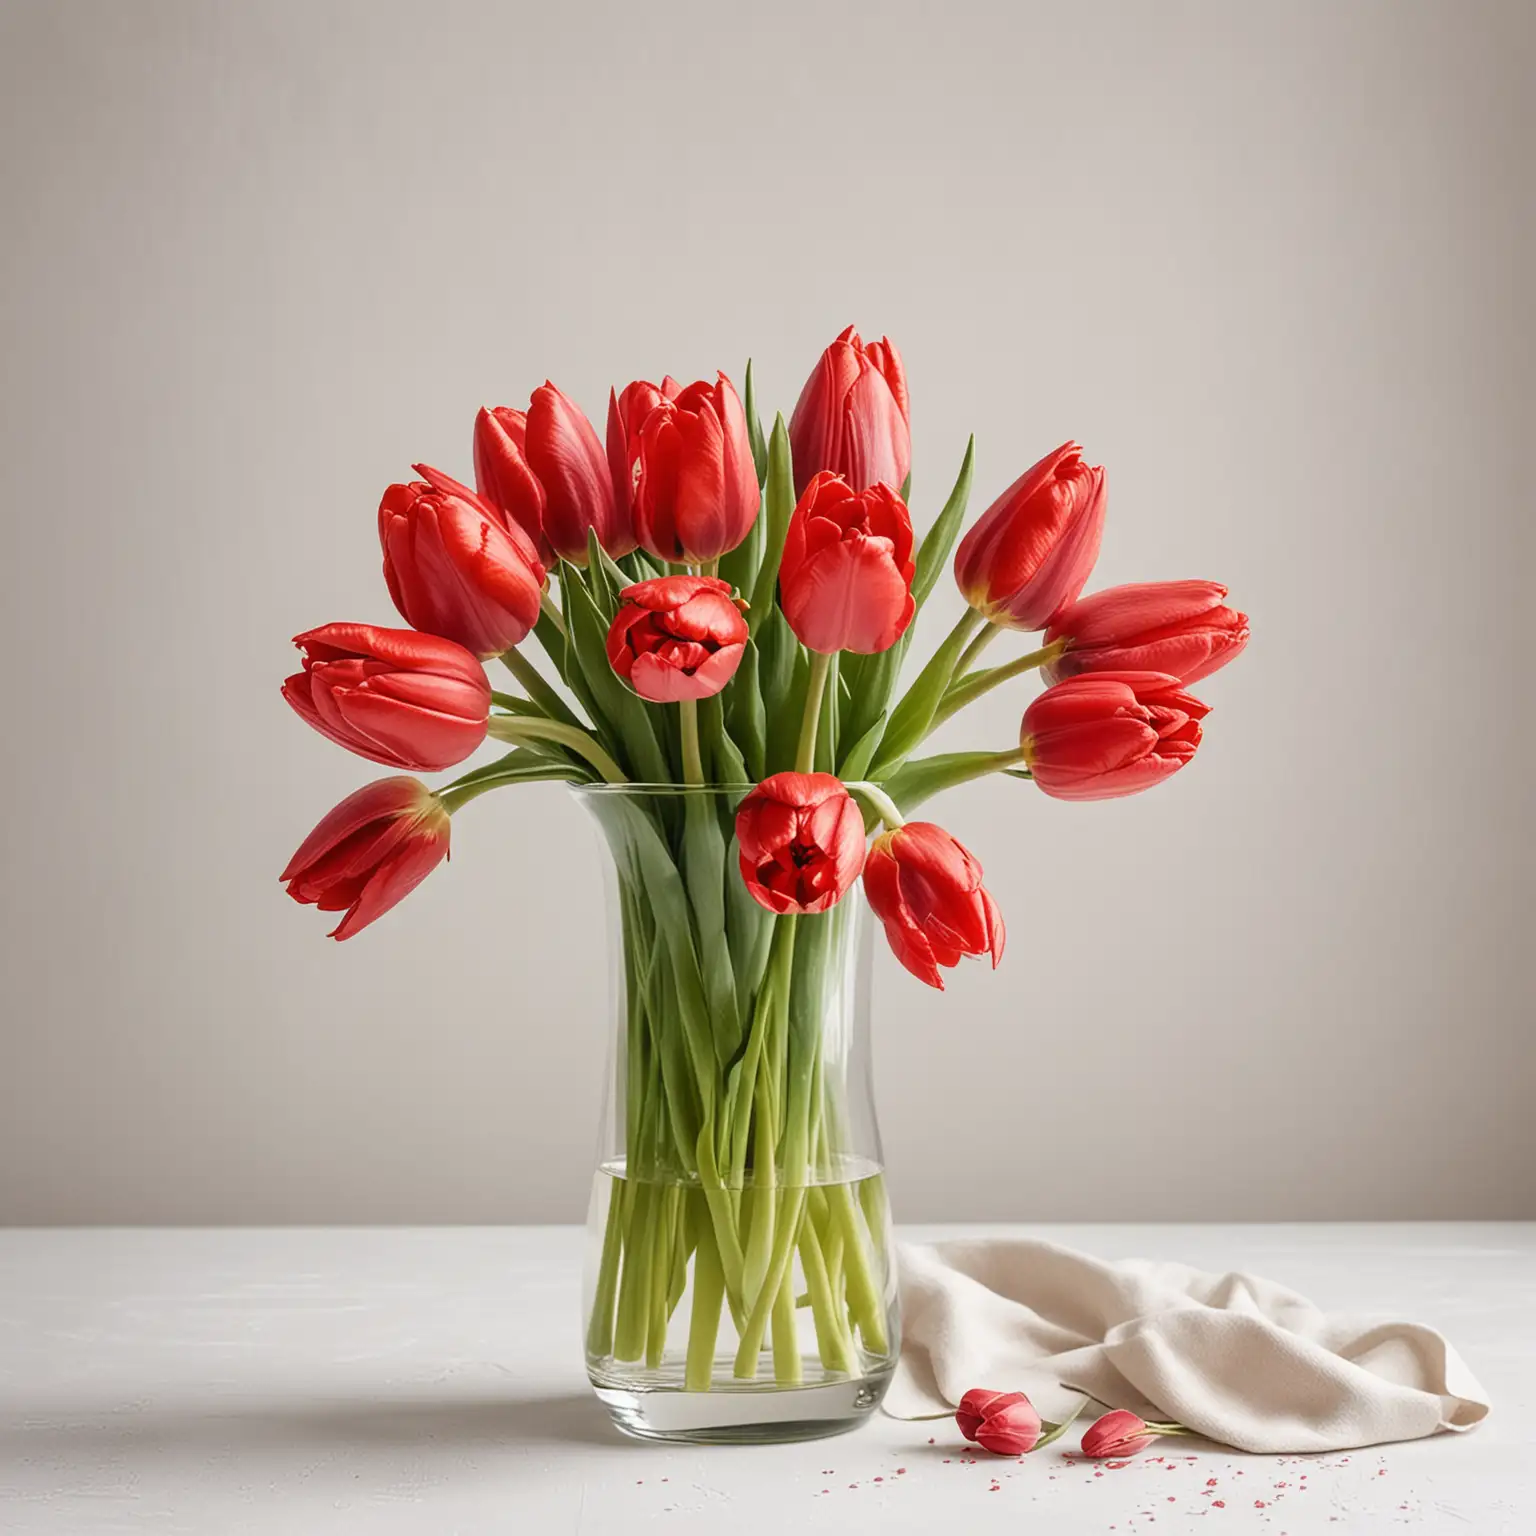 Vibrant Red Tulips in Elegant Glass Vase on Clean White Background